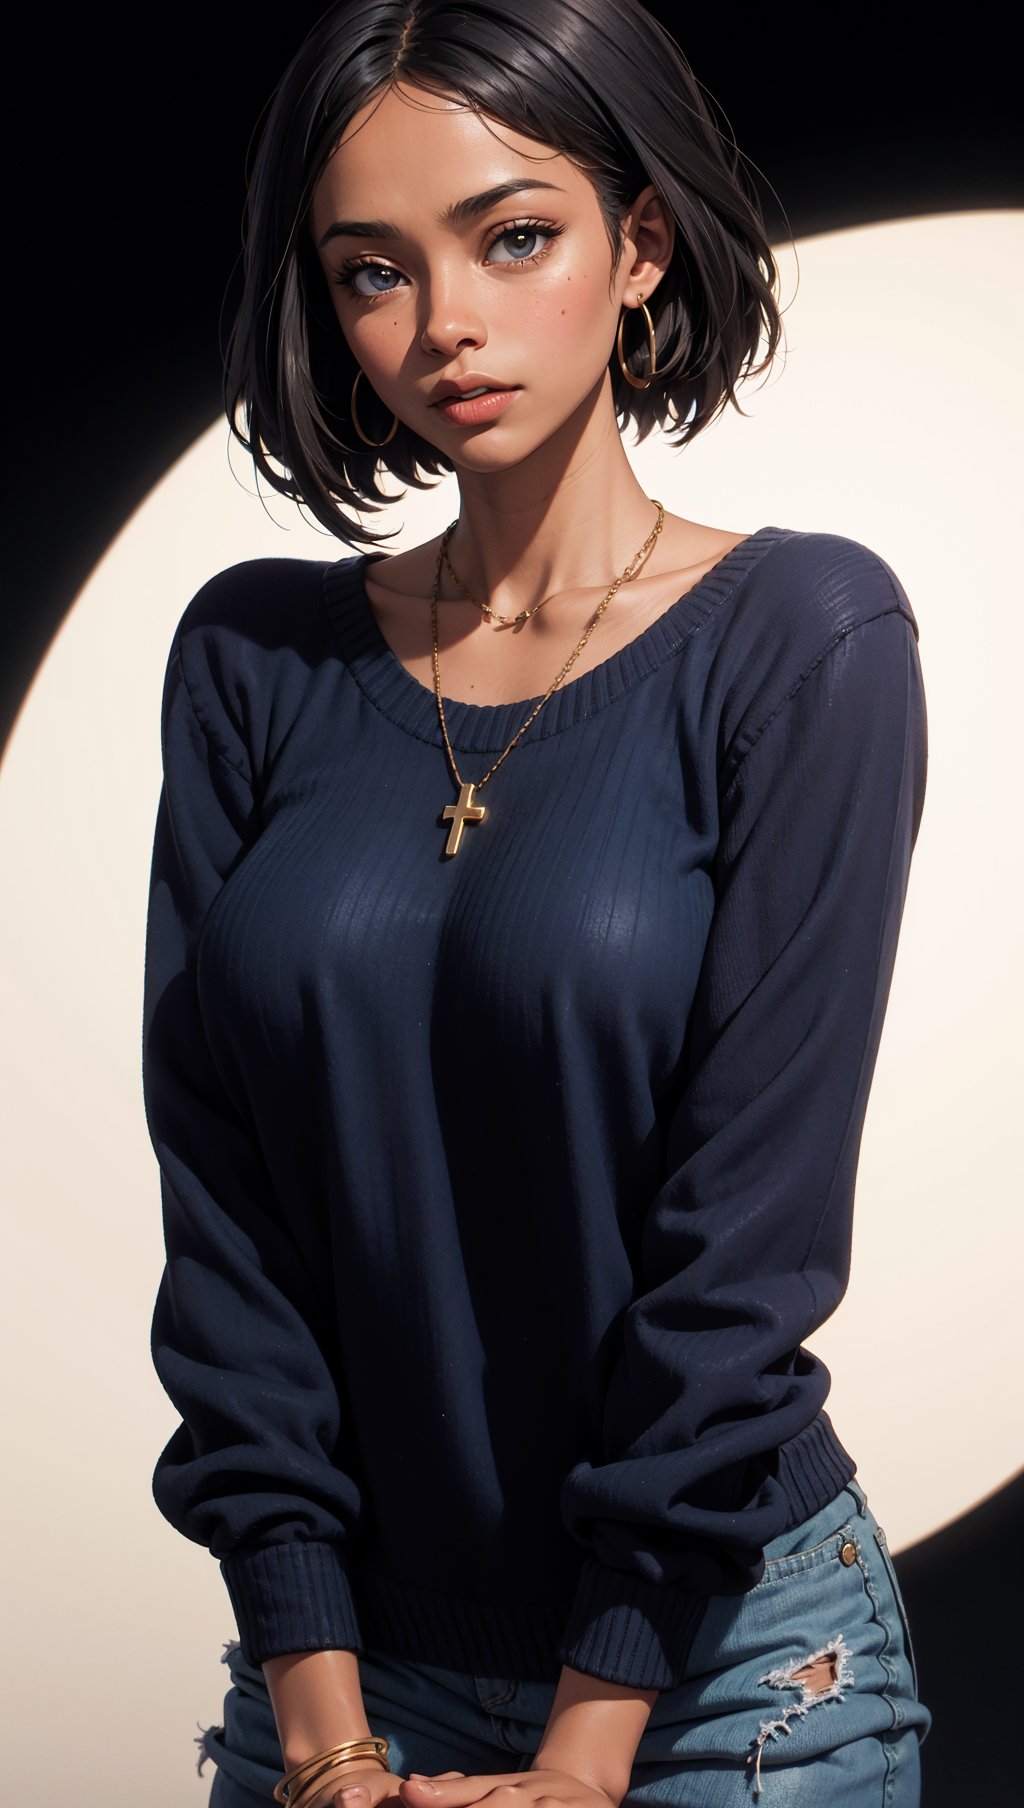 dark skinned african woman,blue sweater,black background,earrings,necklace,